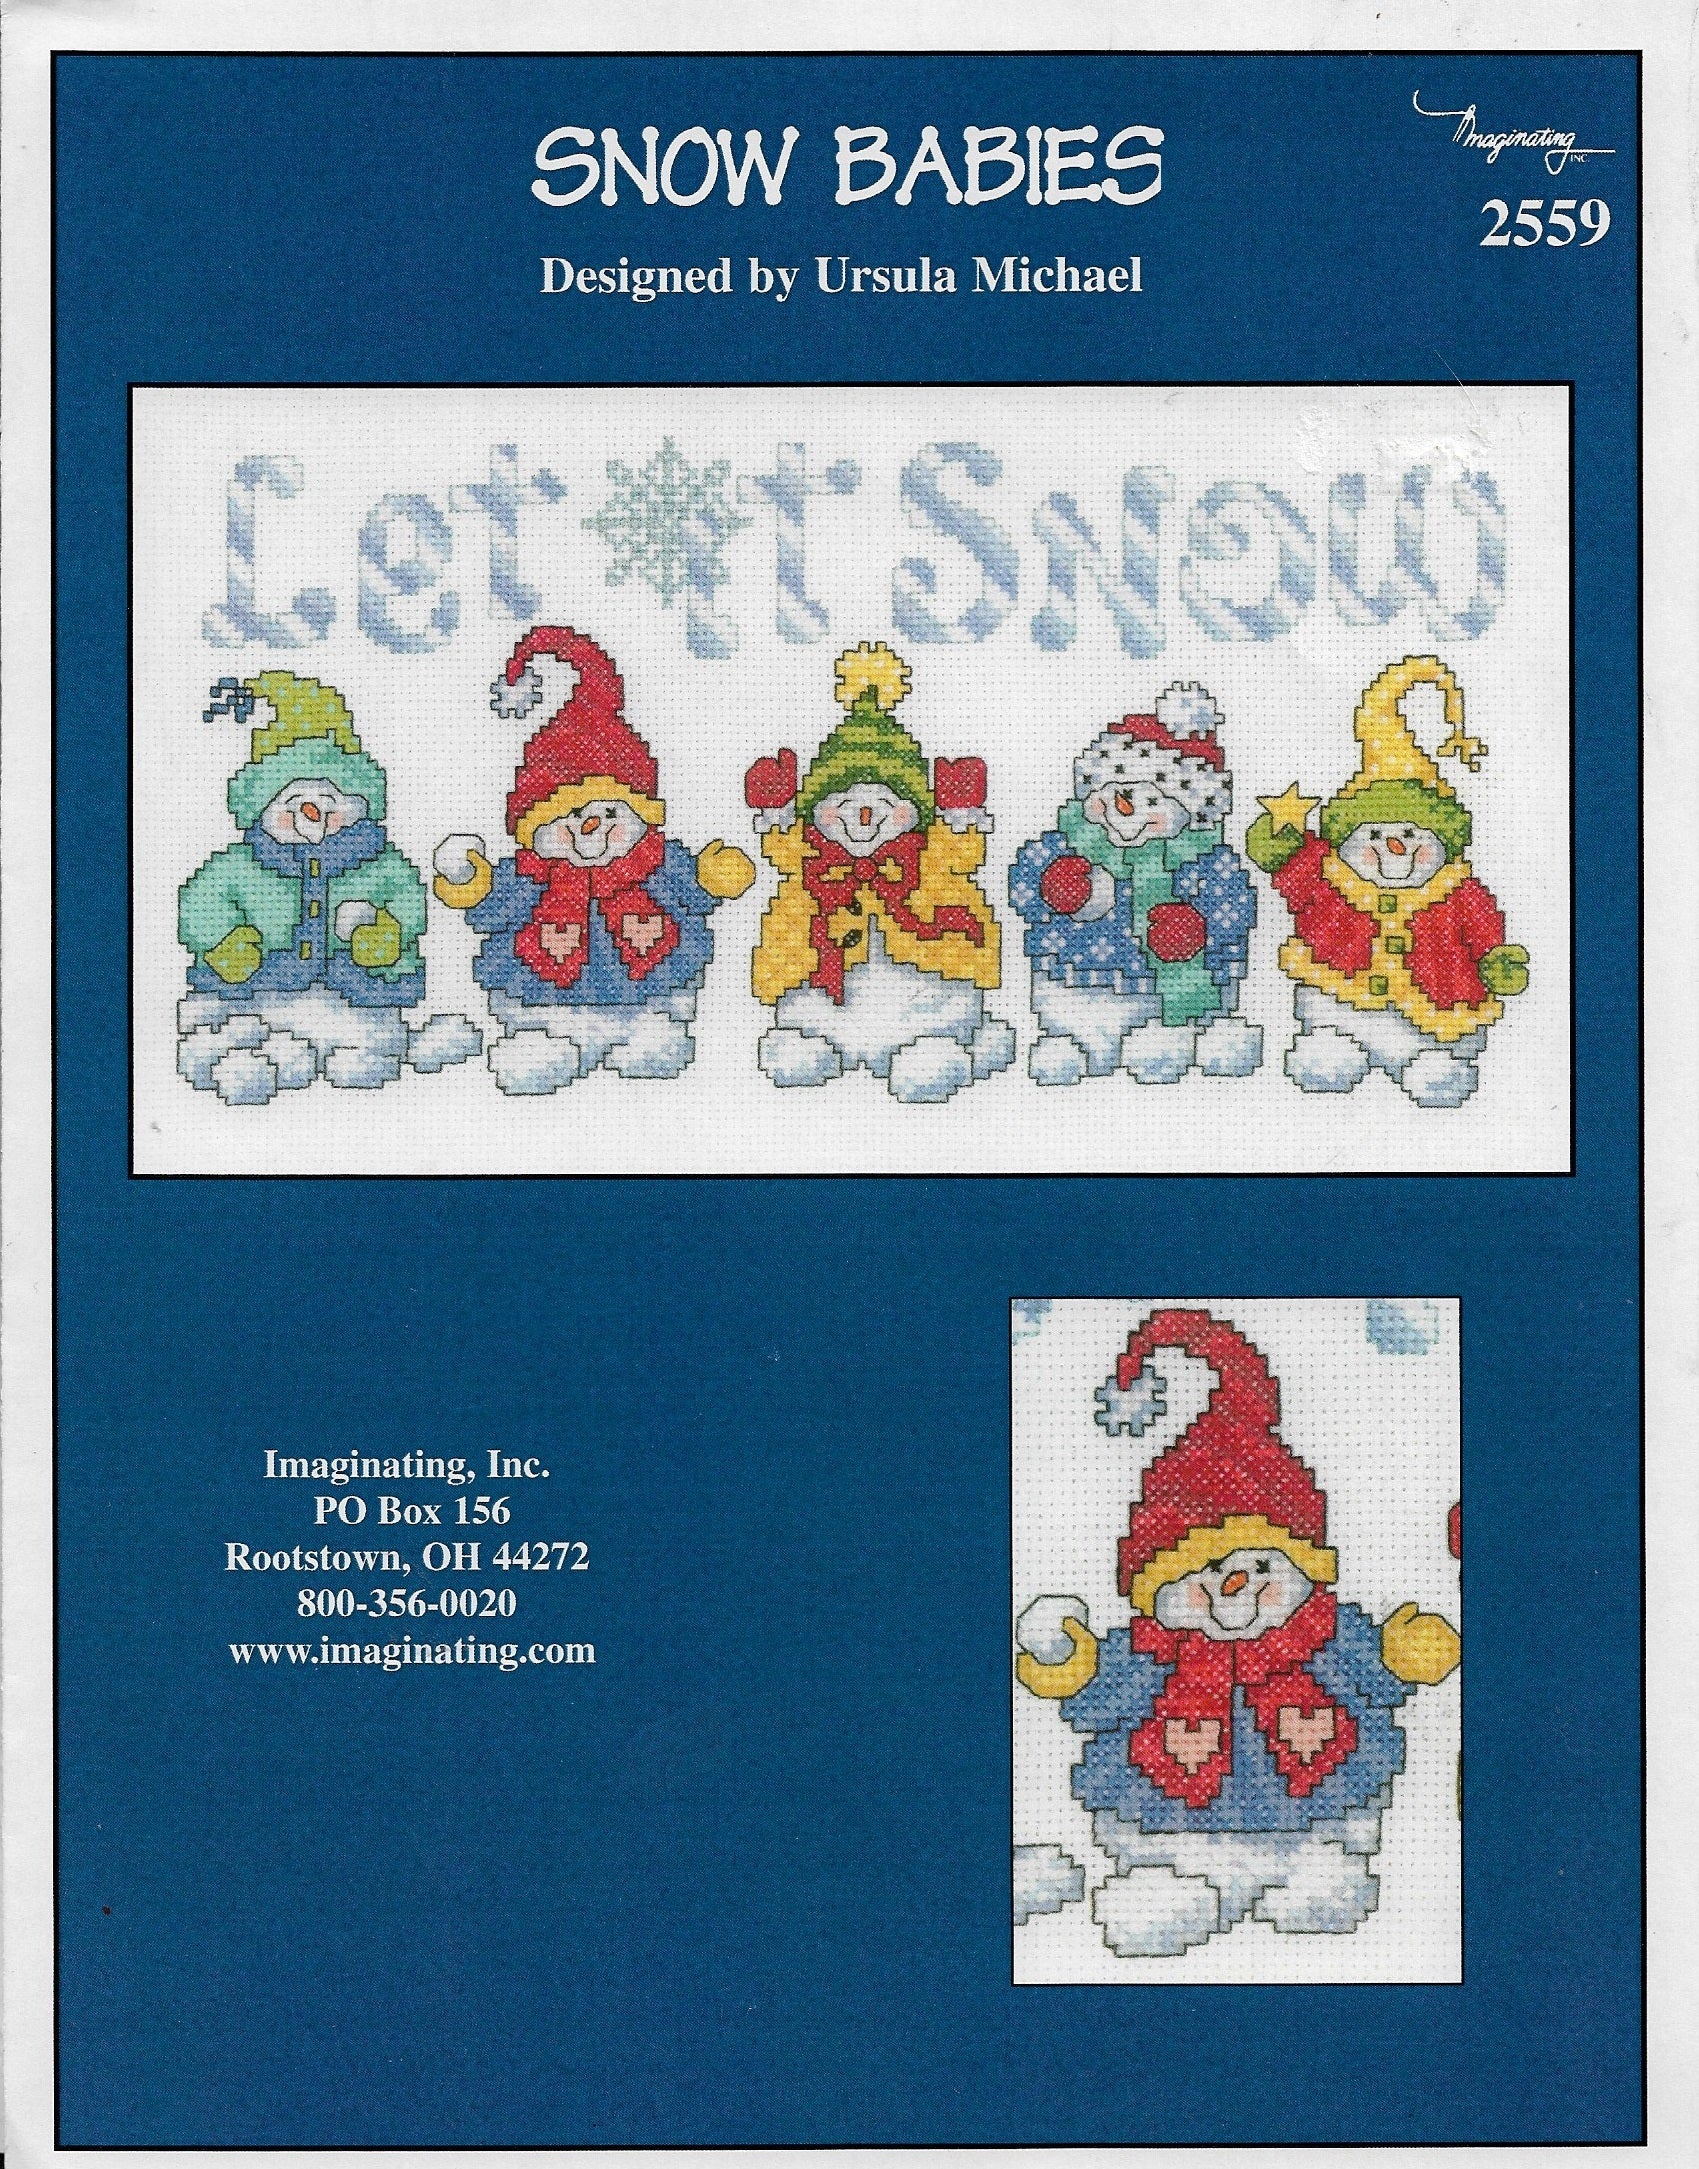 Imaginating Snow Babies 2559 snowmen christmas cross stitch pattern